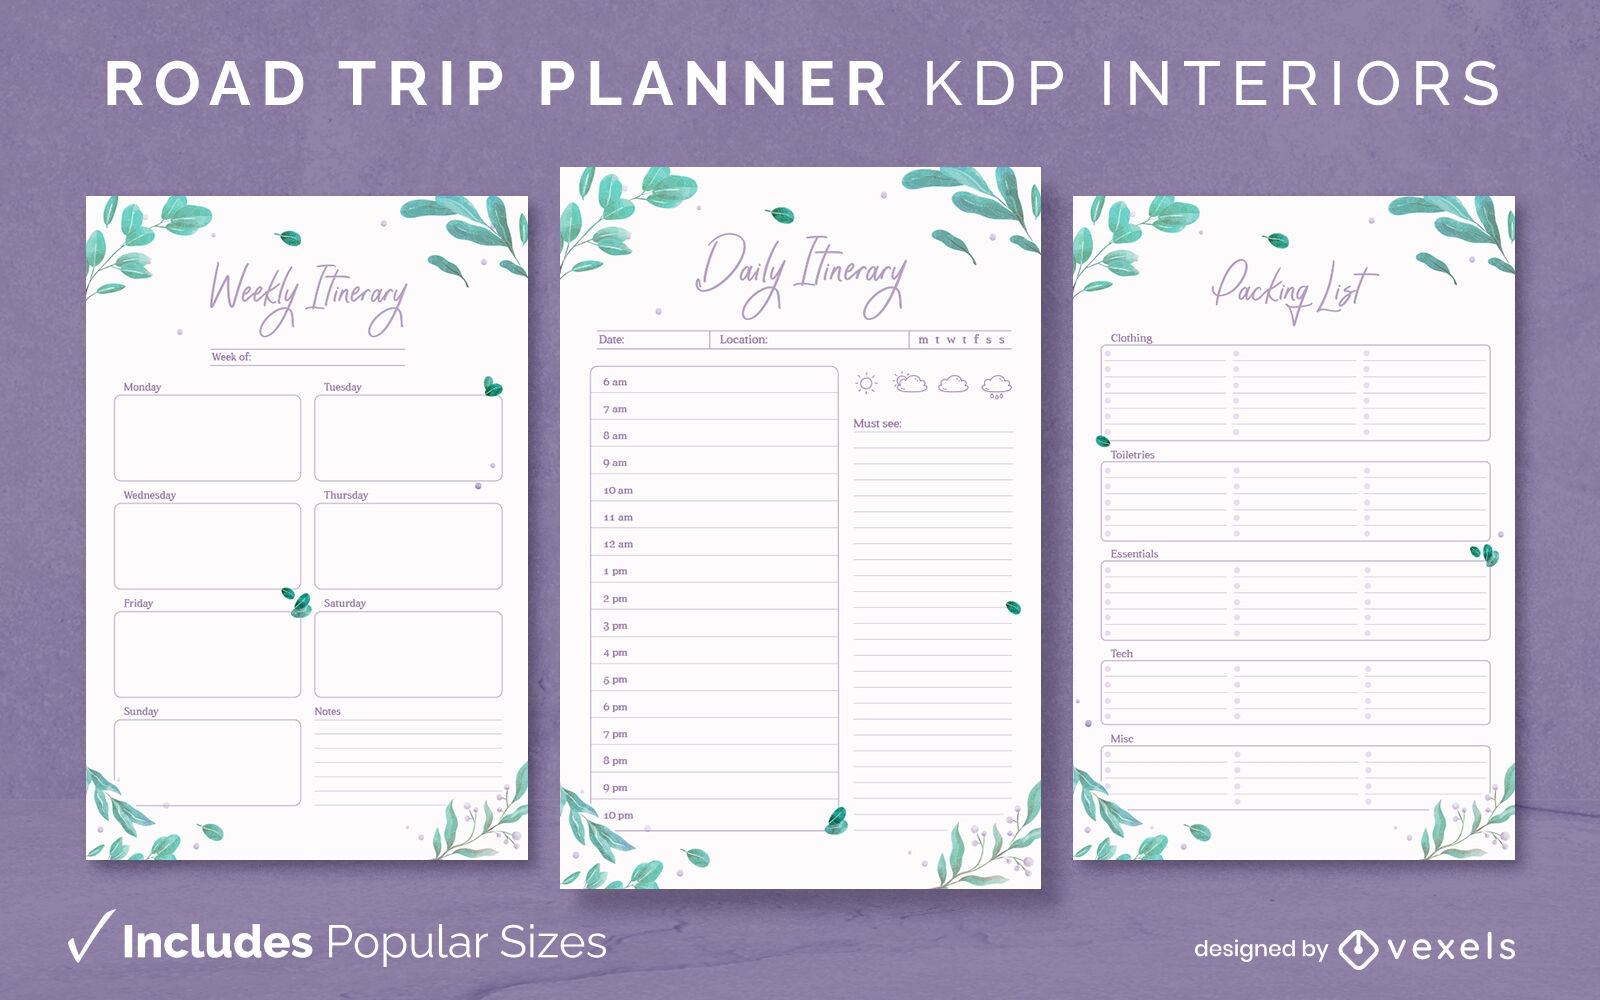 Road trip planner leaves Design Template KDP